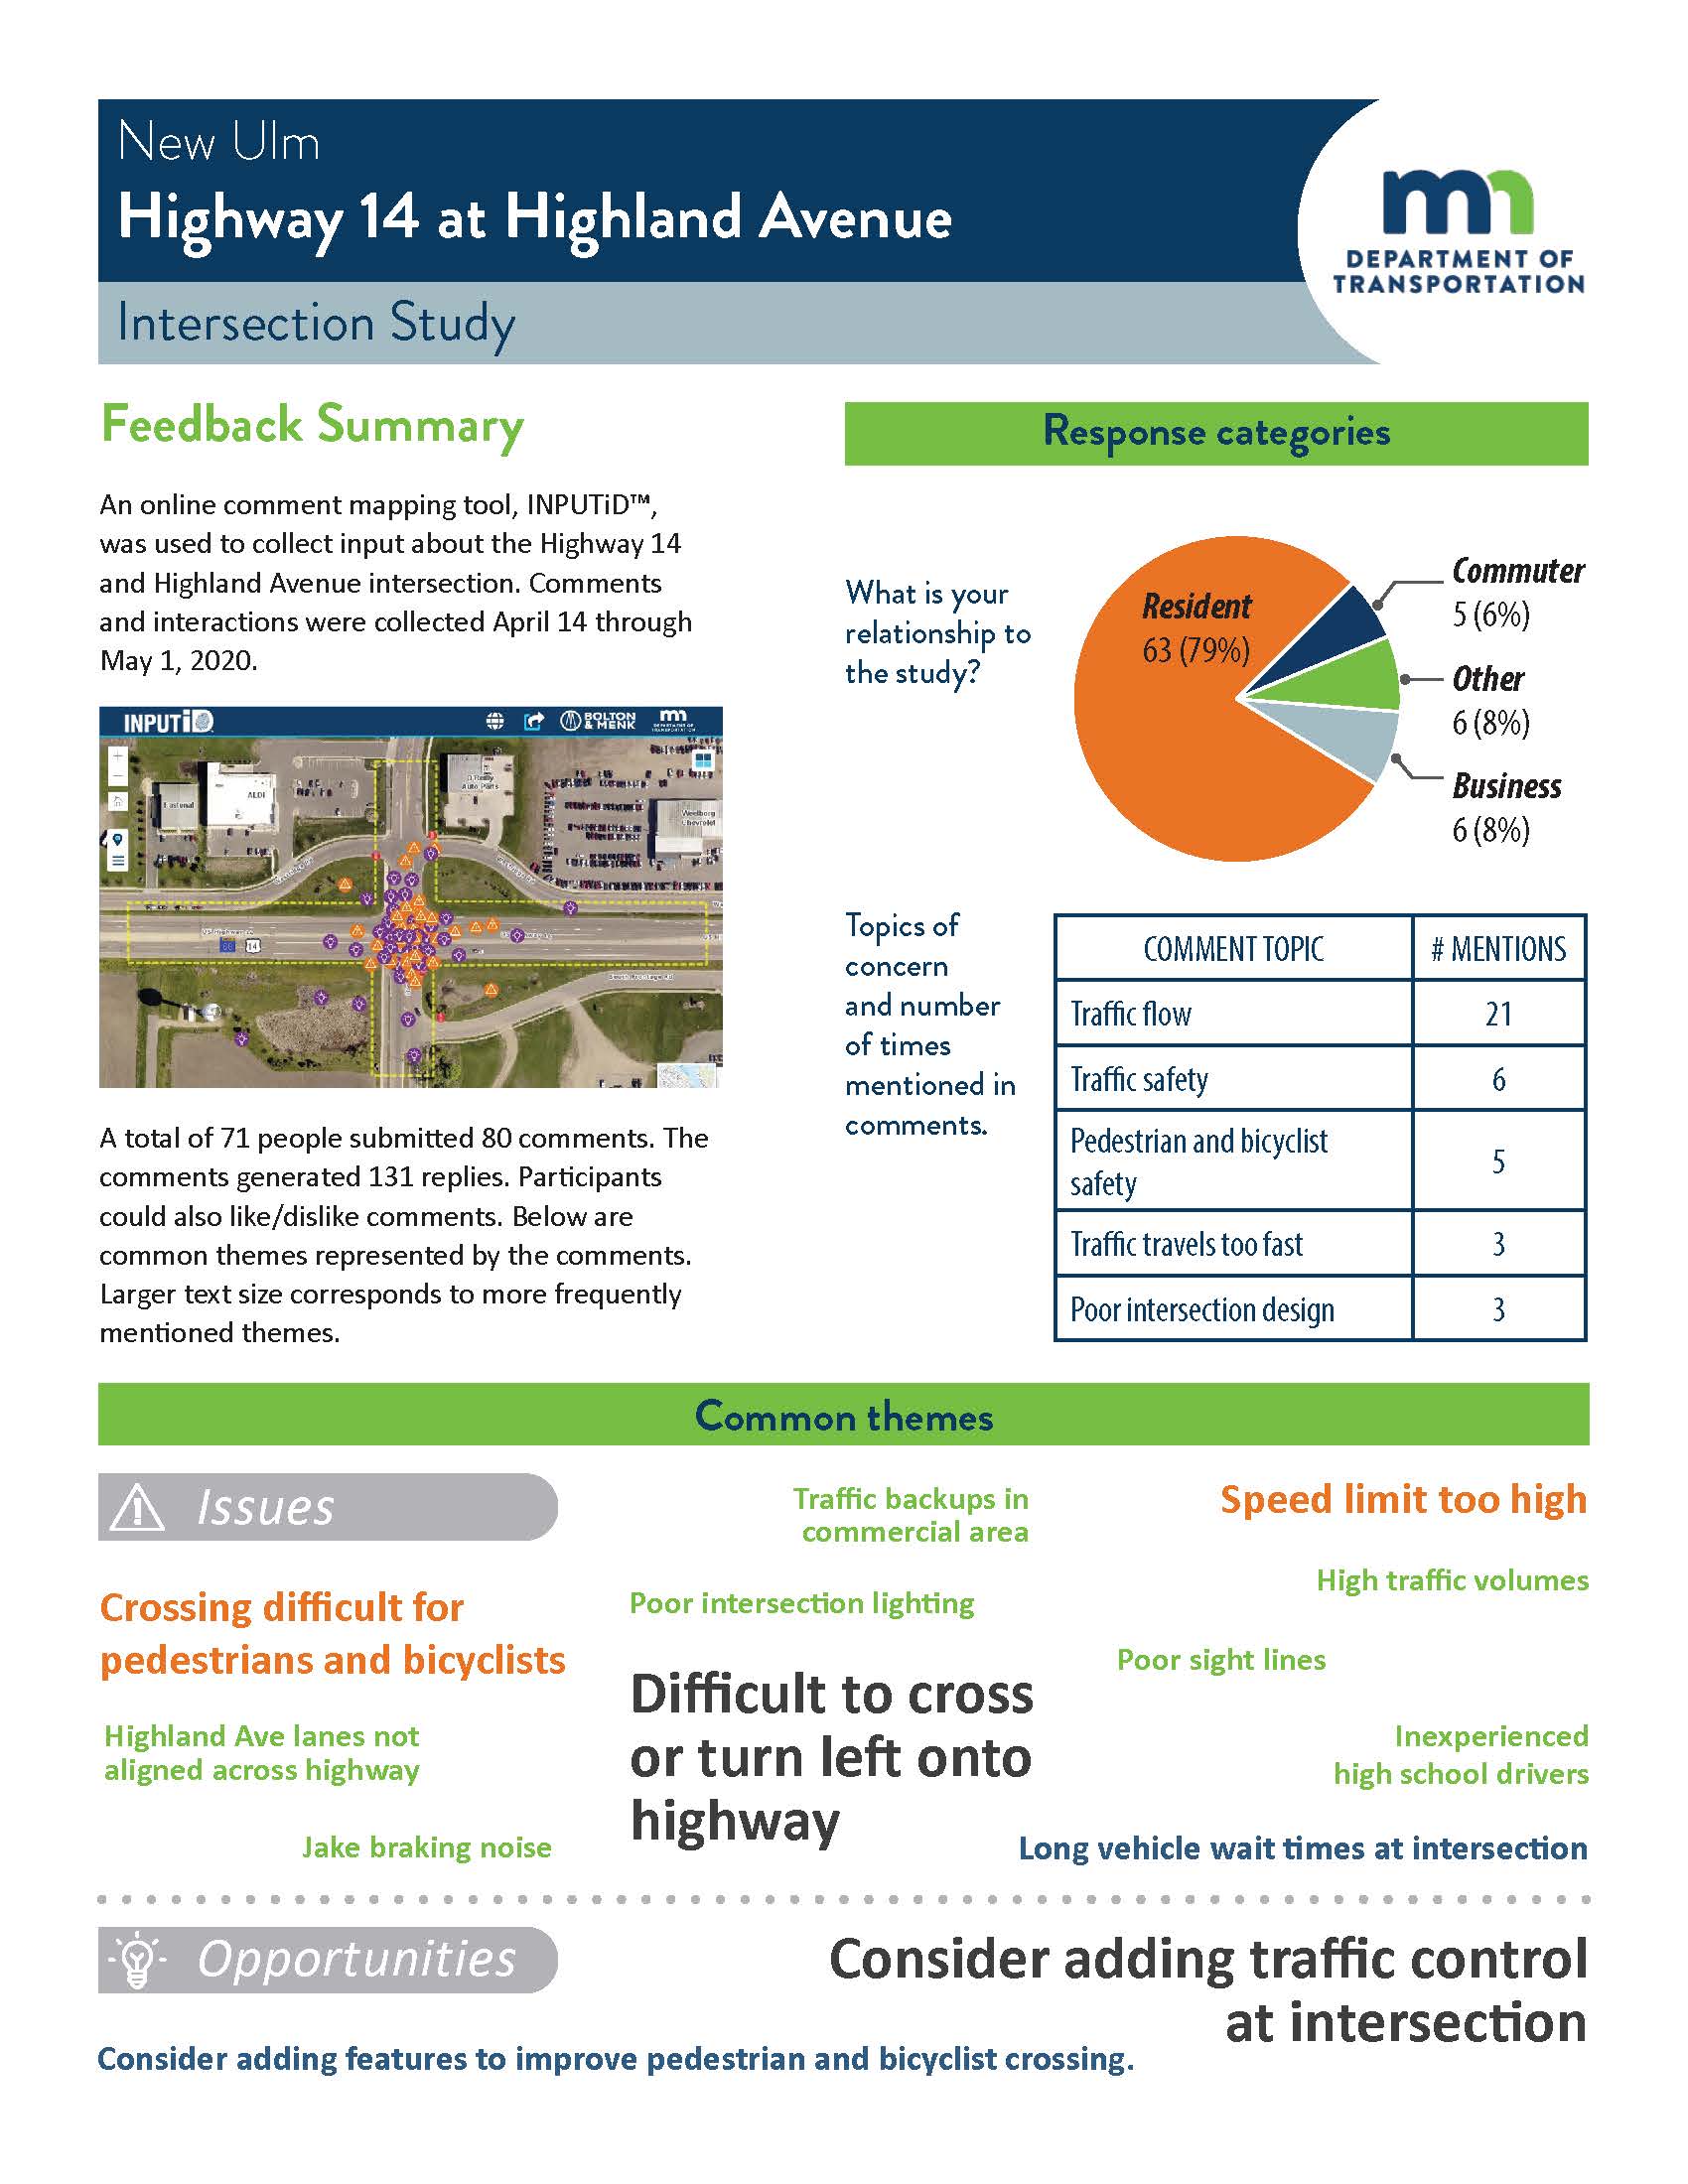 Highway 14/Highland Avenue Study feedback summary